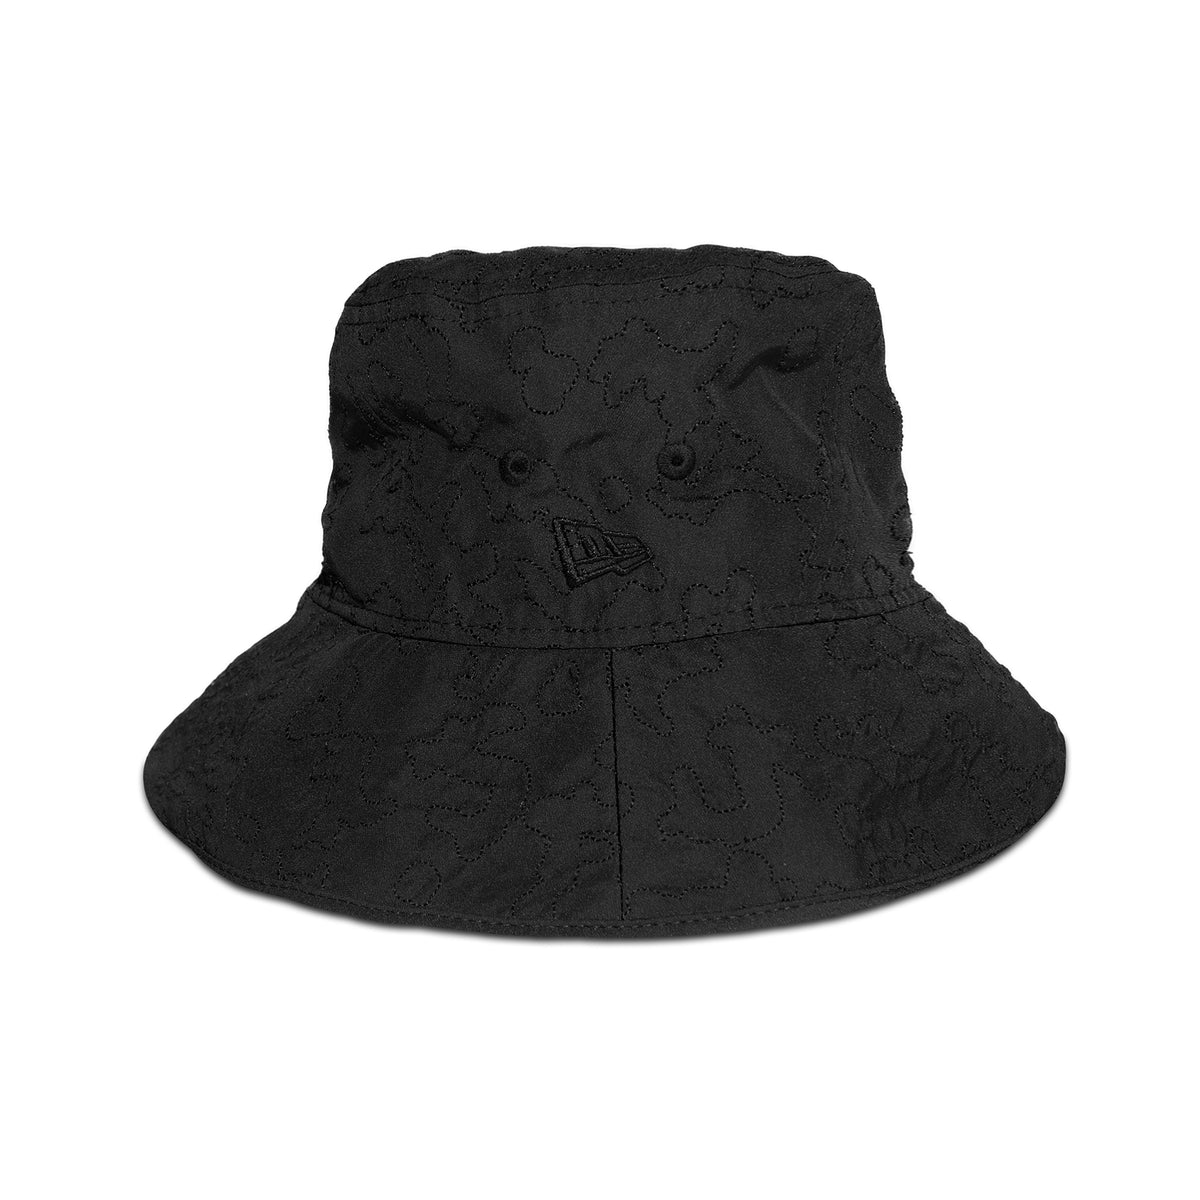 FW Apparel Source Bucket Hat Slate Black, One Size